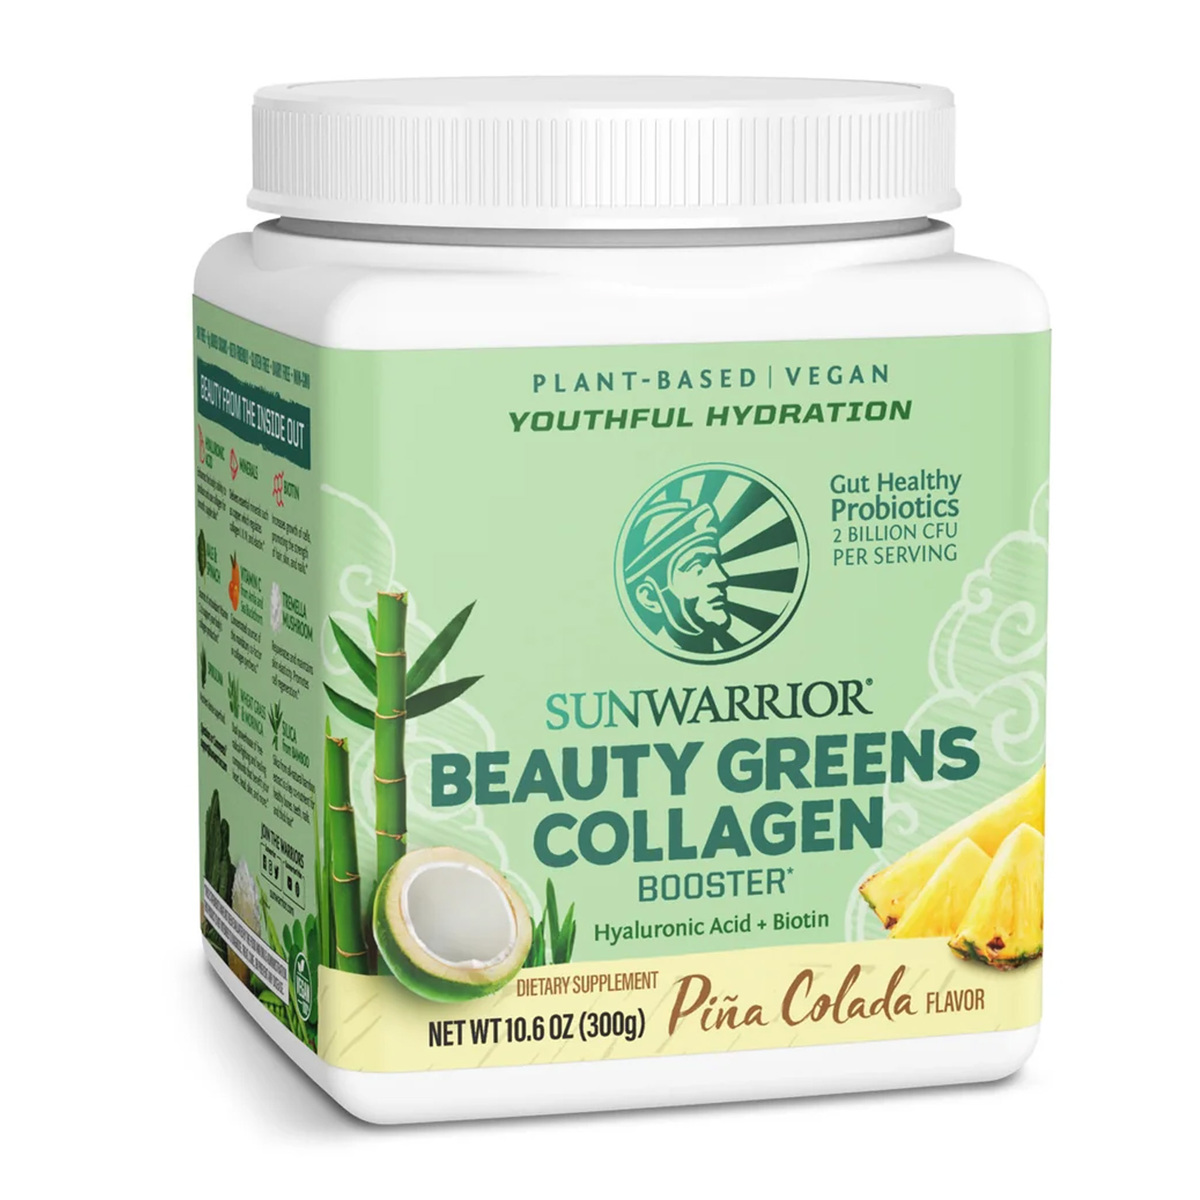 Sunwarrior Beauty Greens Pina Colada Flavor Collagen Booster, 300 g